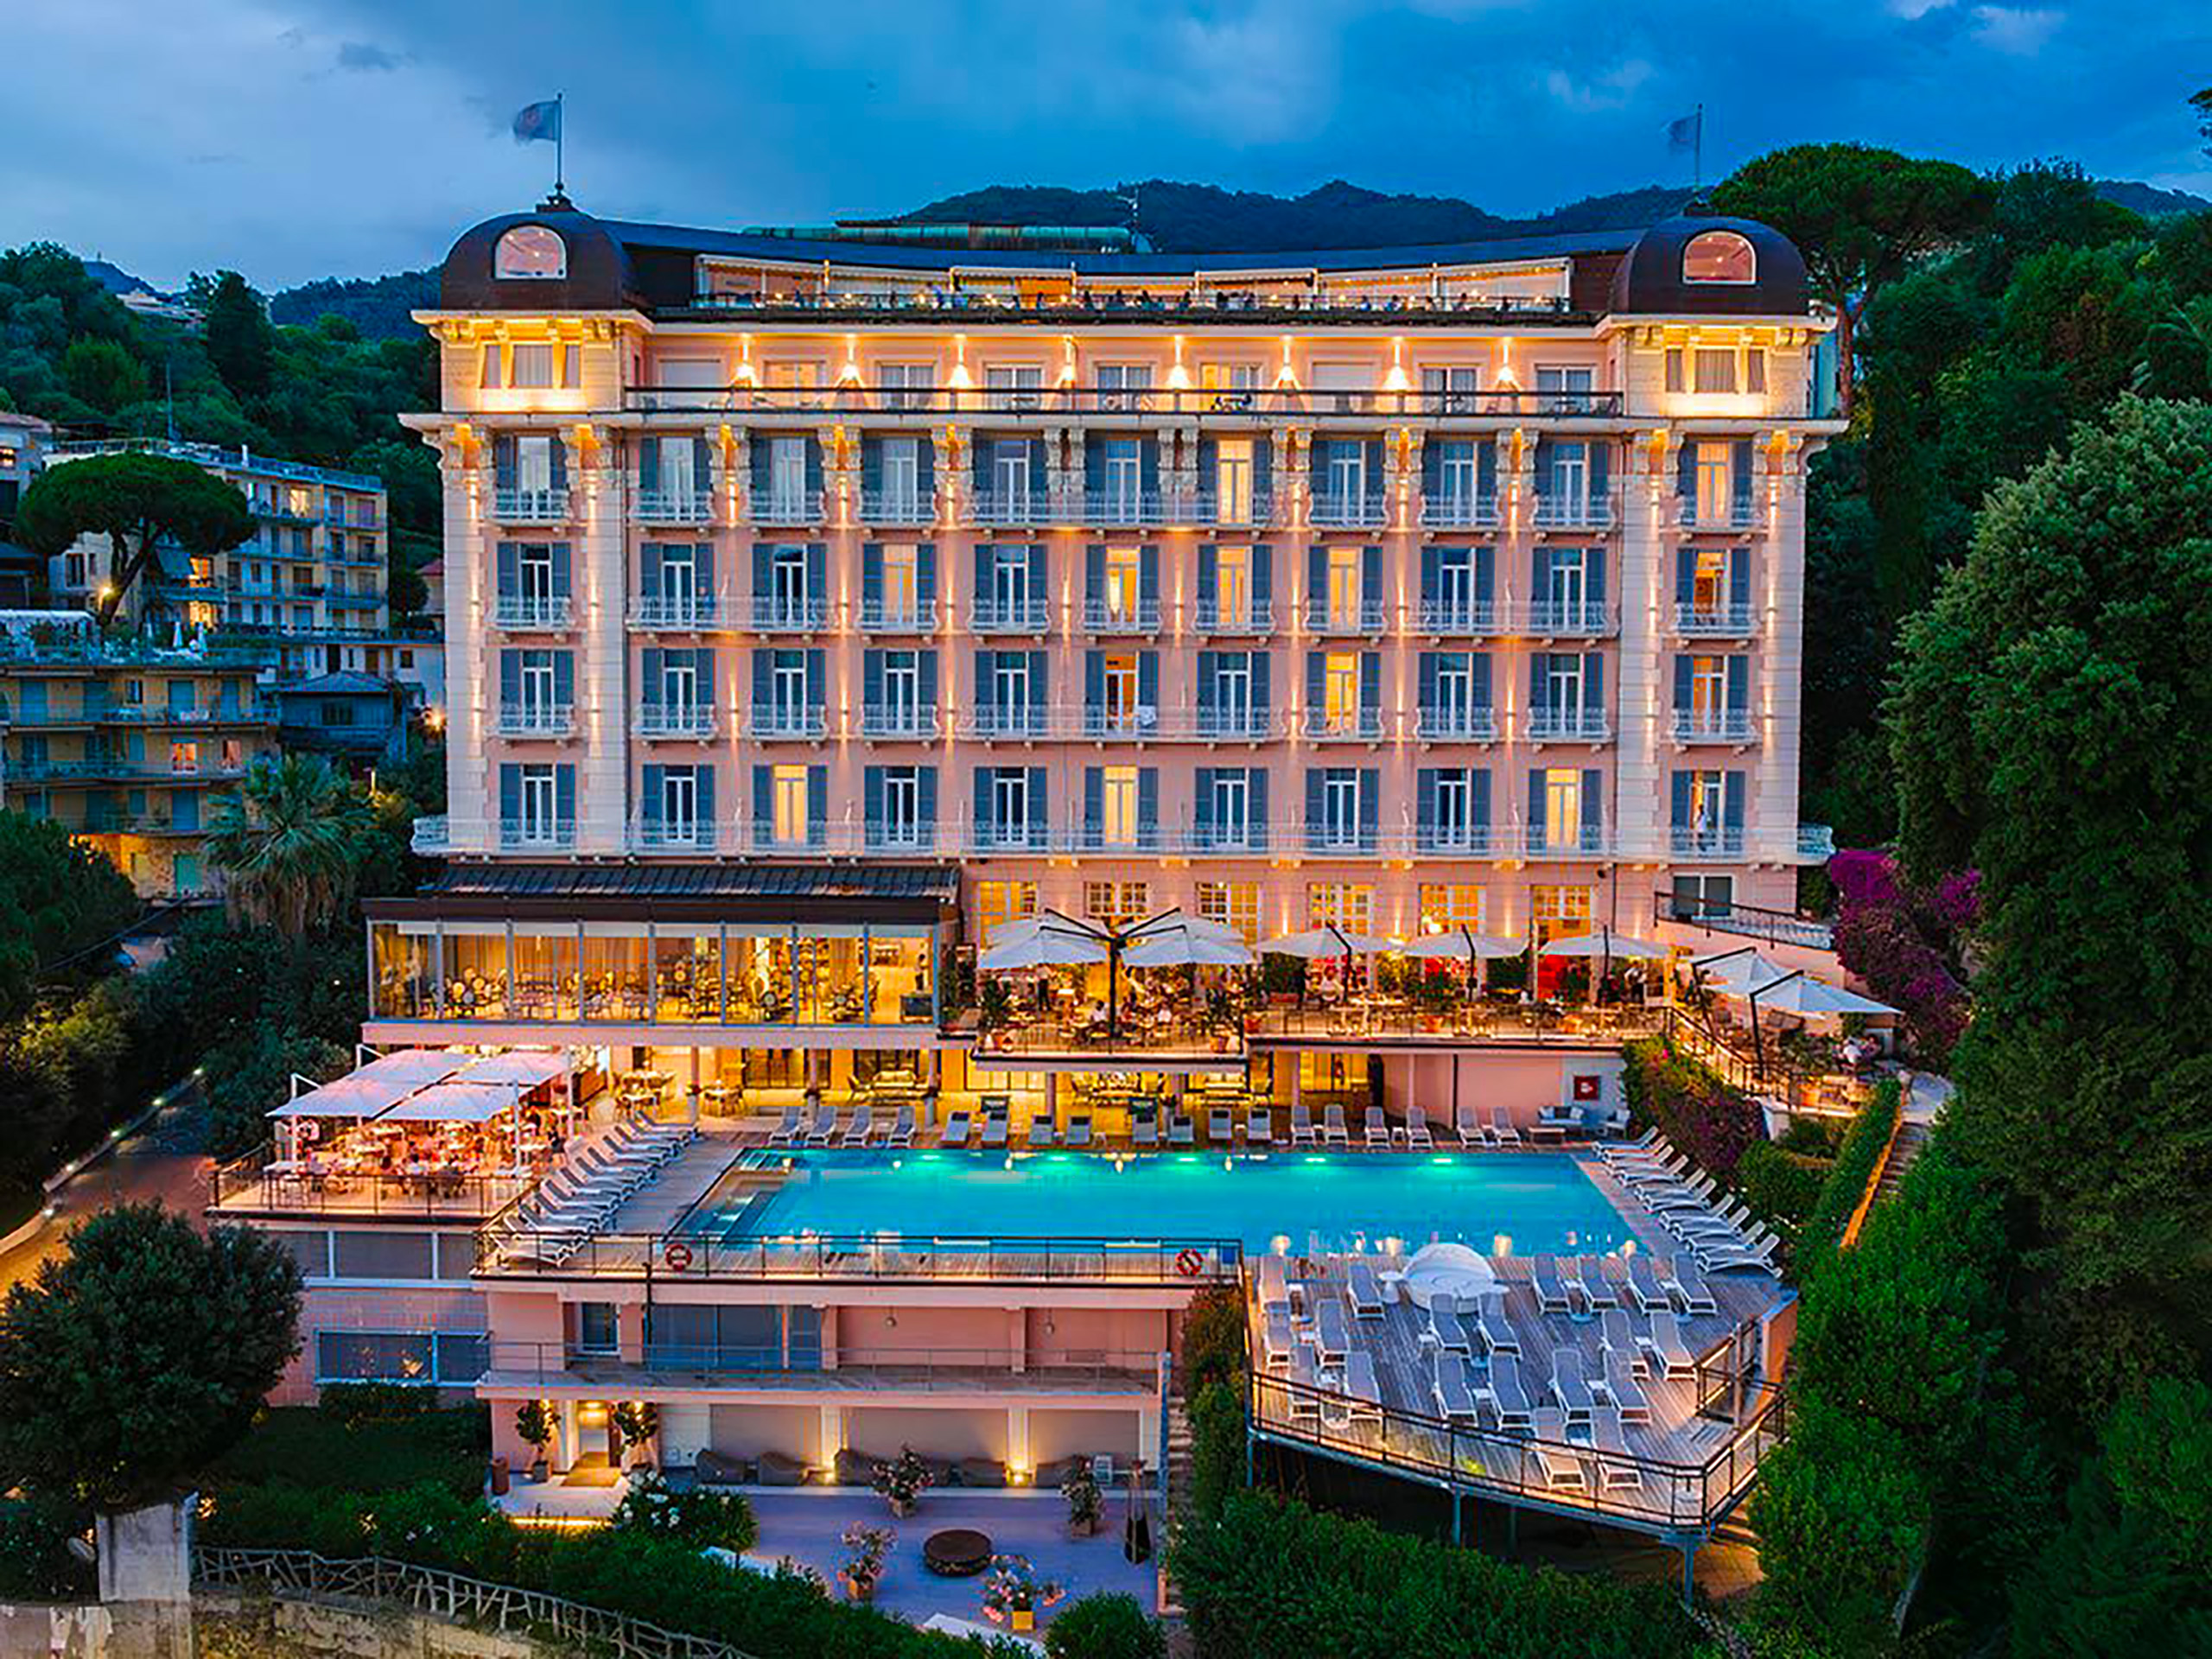 Grand Hotel Bristol - aereal view - Luxury Hospitality Brand - DROPSHOT